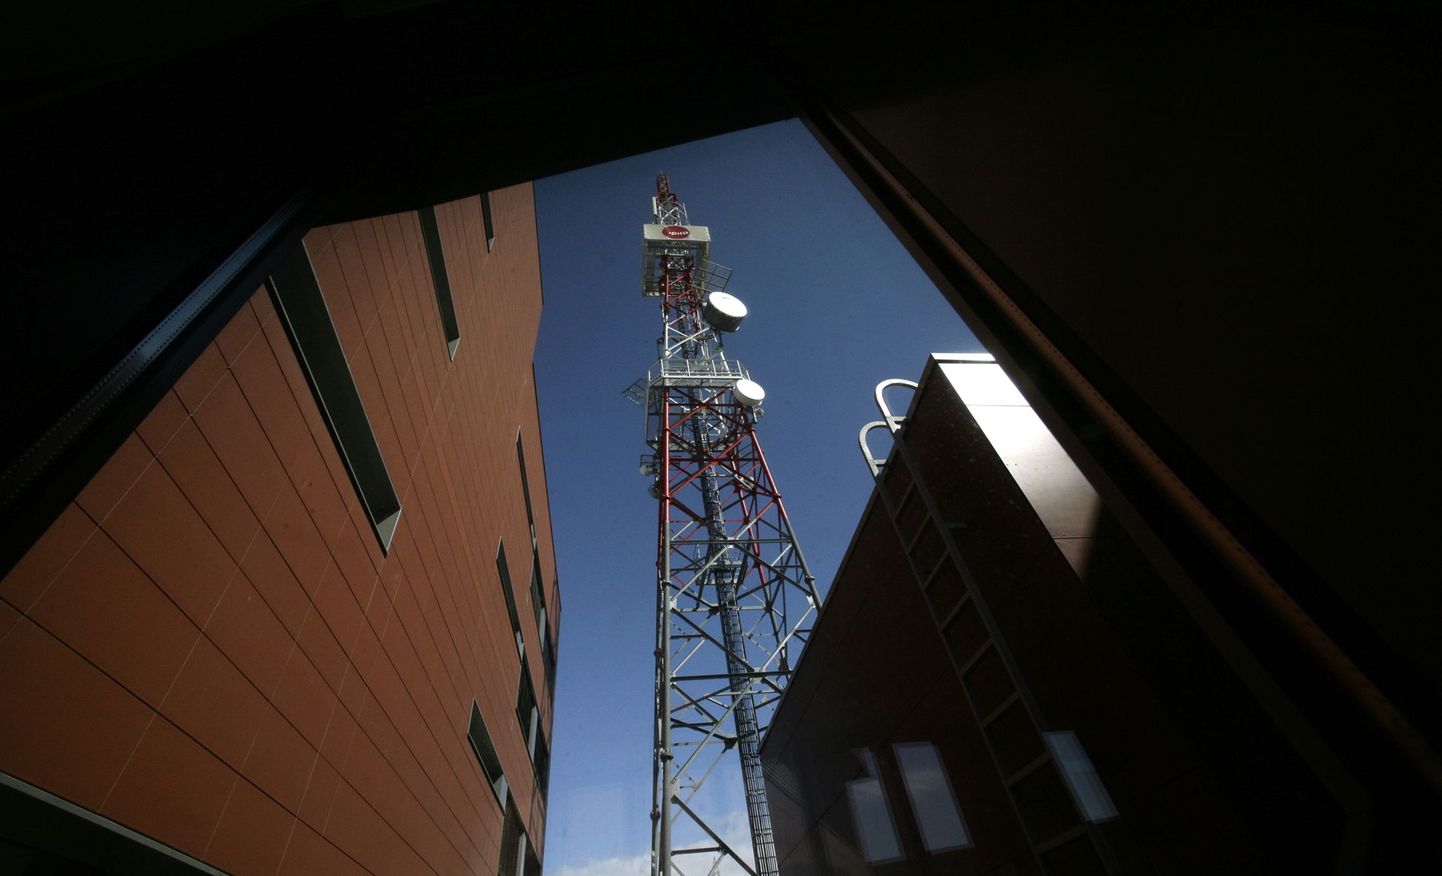 Kosovos ametlikult tegutseva mobiilsideoperaatori IPKO antenn.